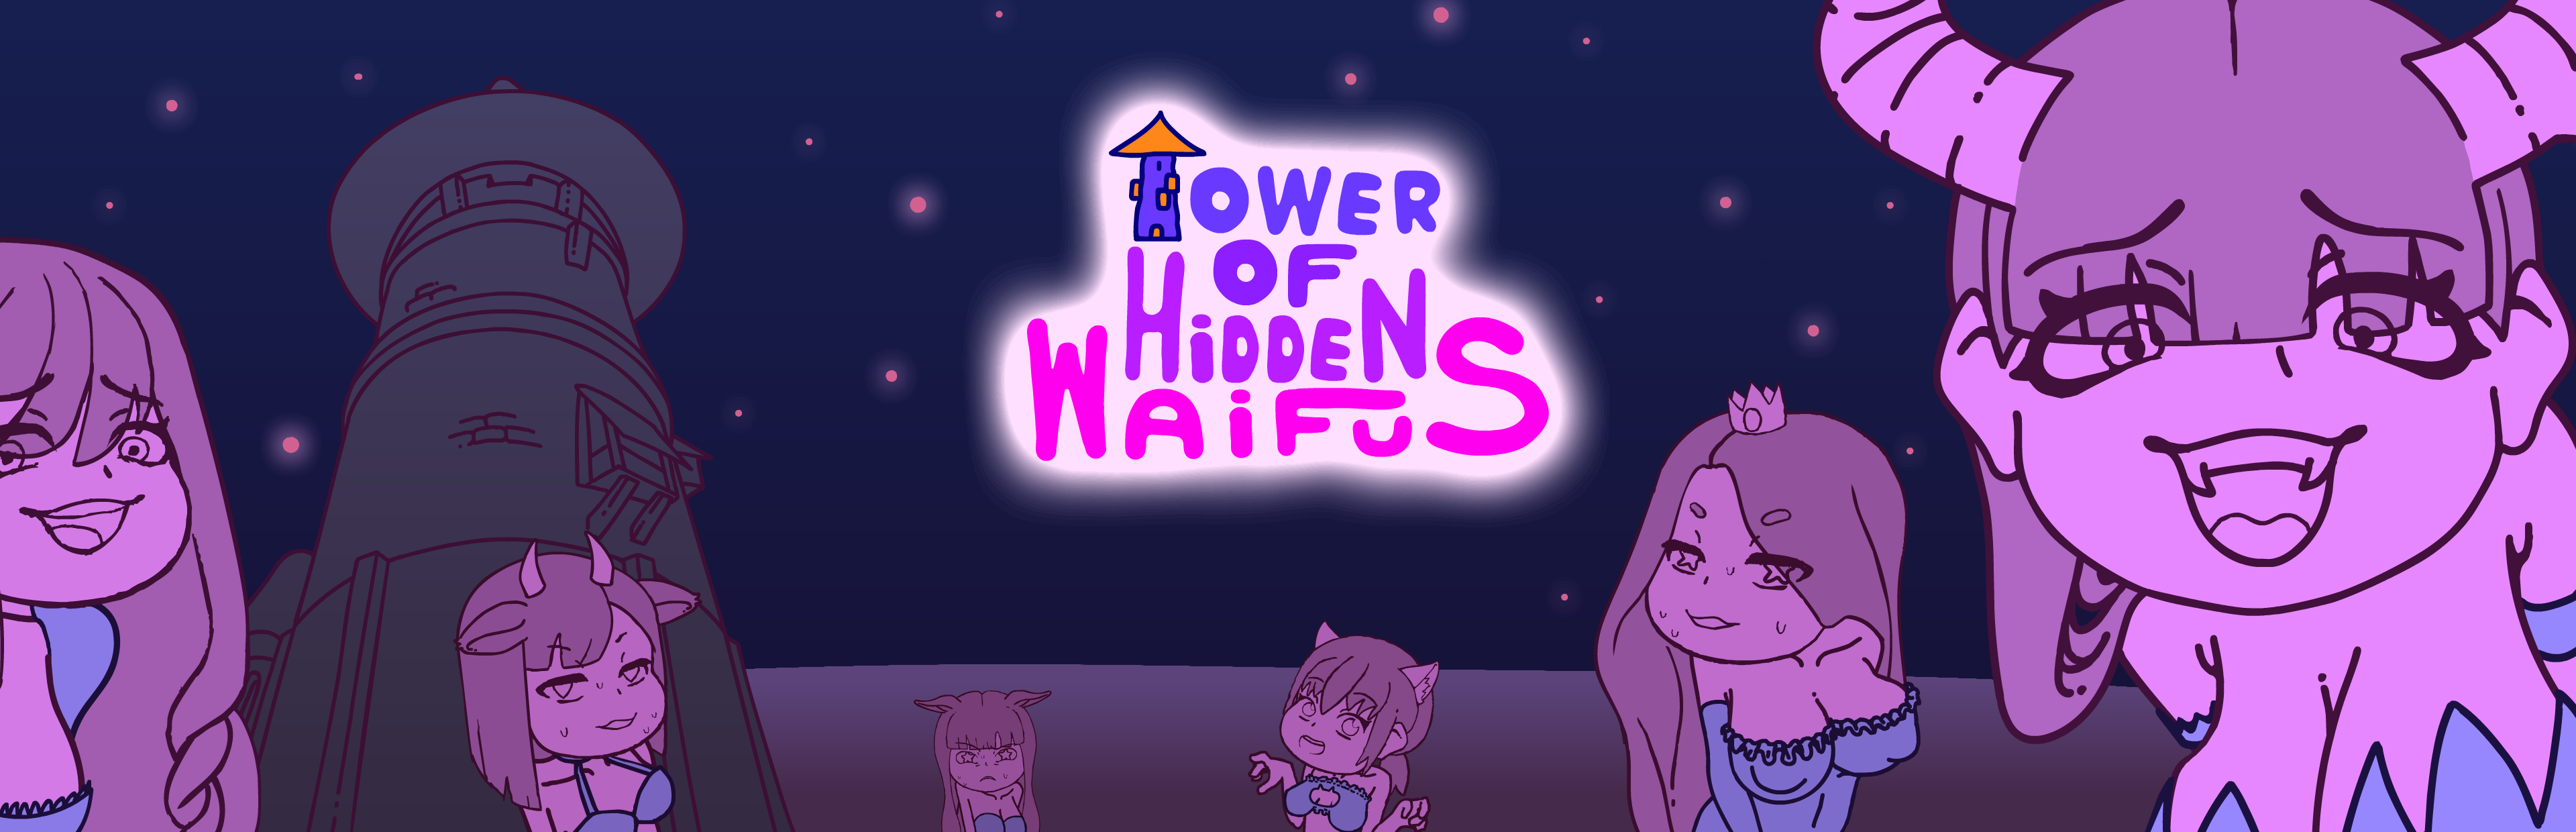 Tower of Hidden Waifus poster